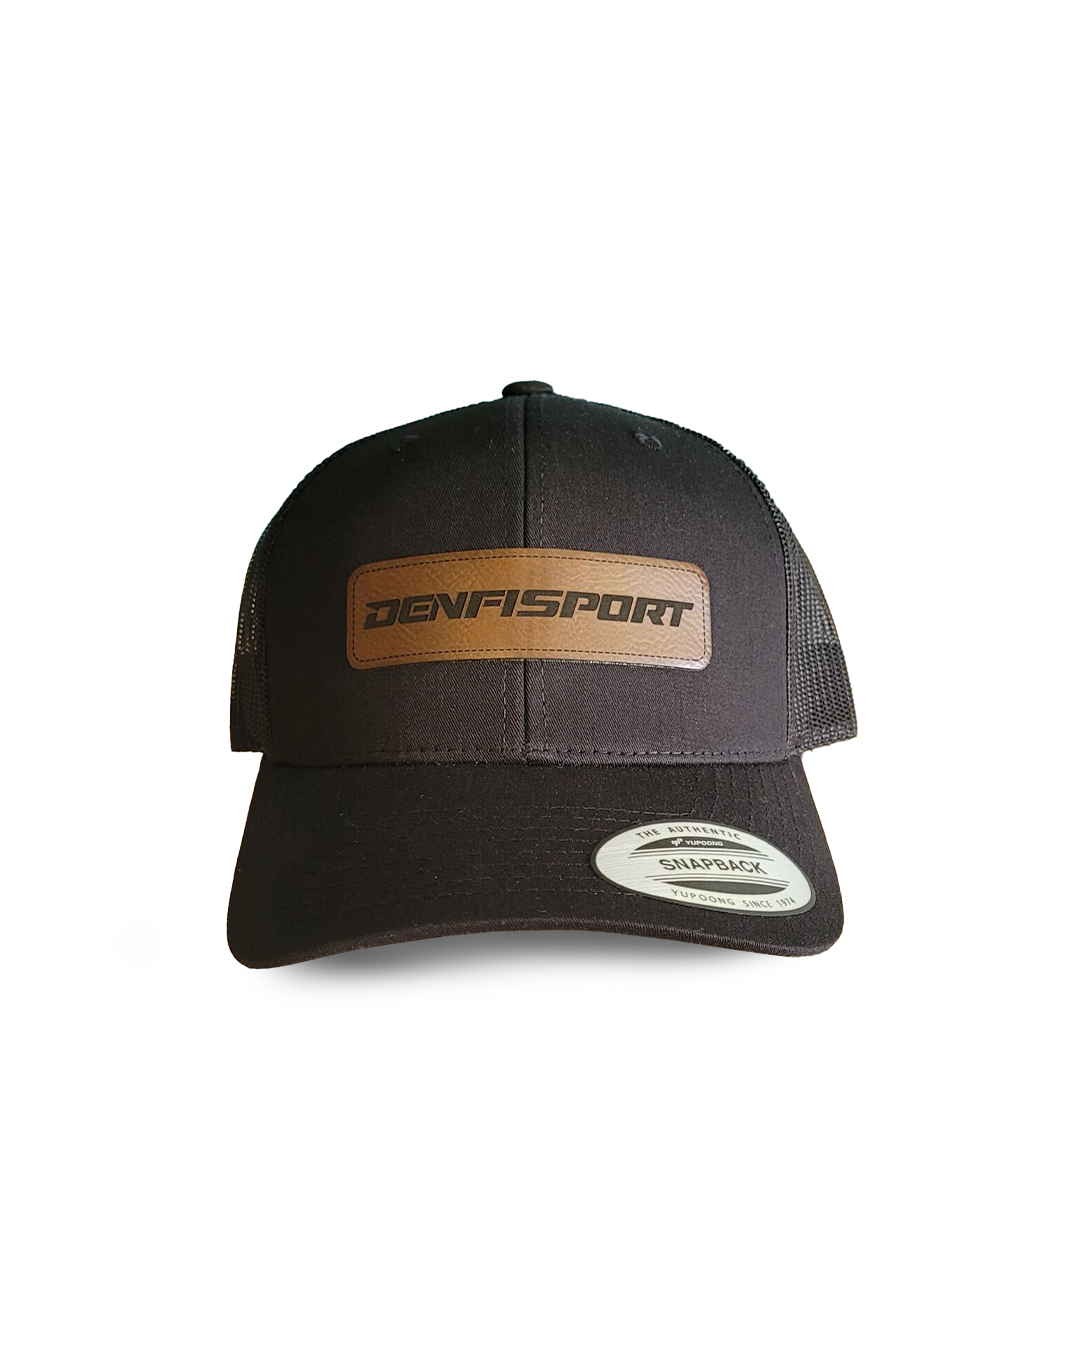 Denfi Sport hat